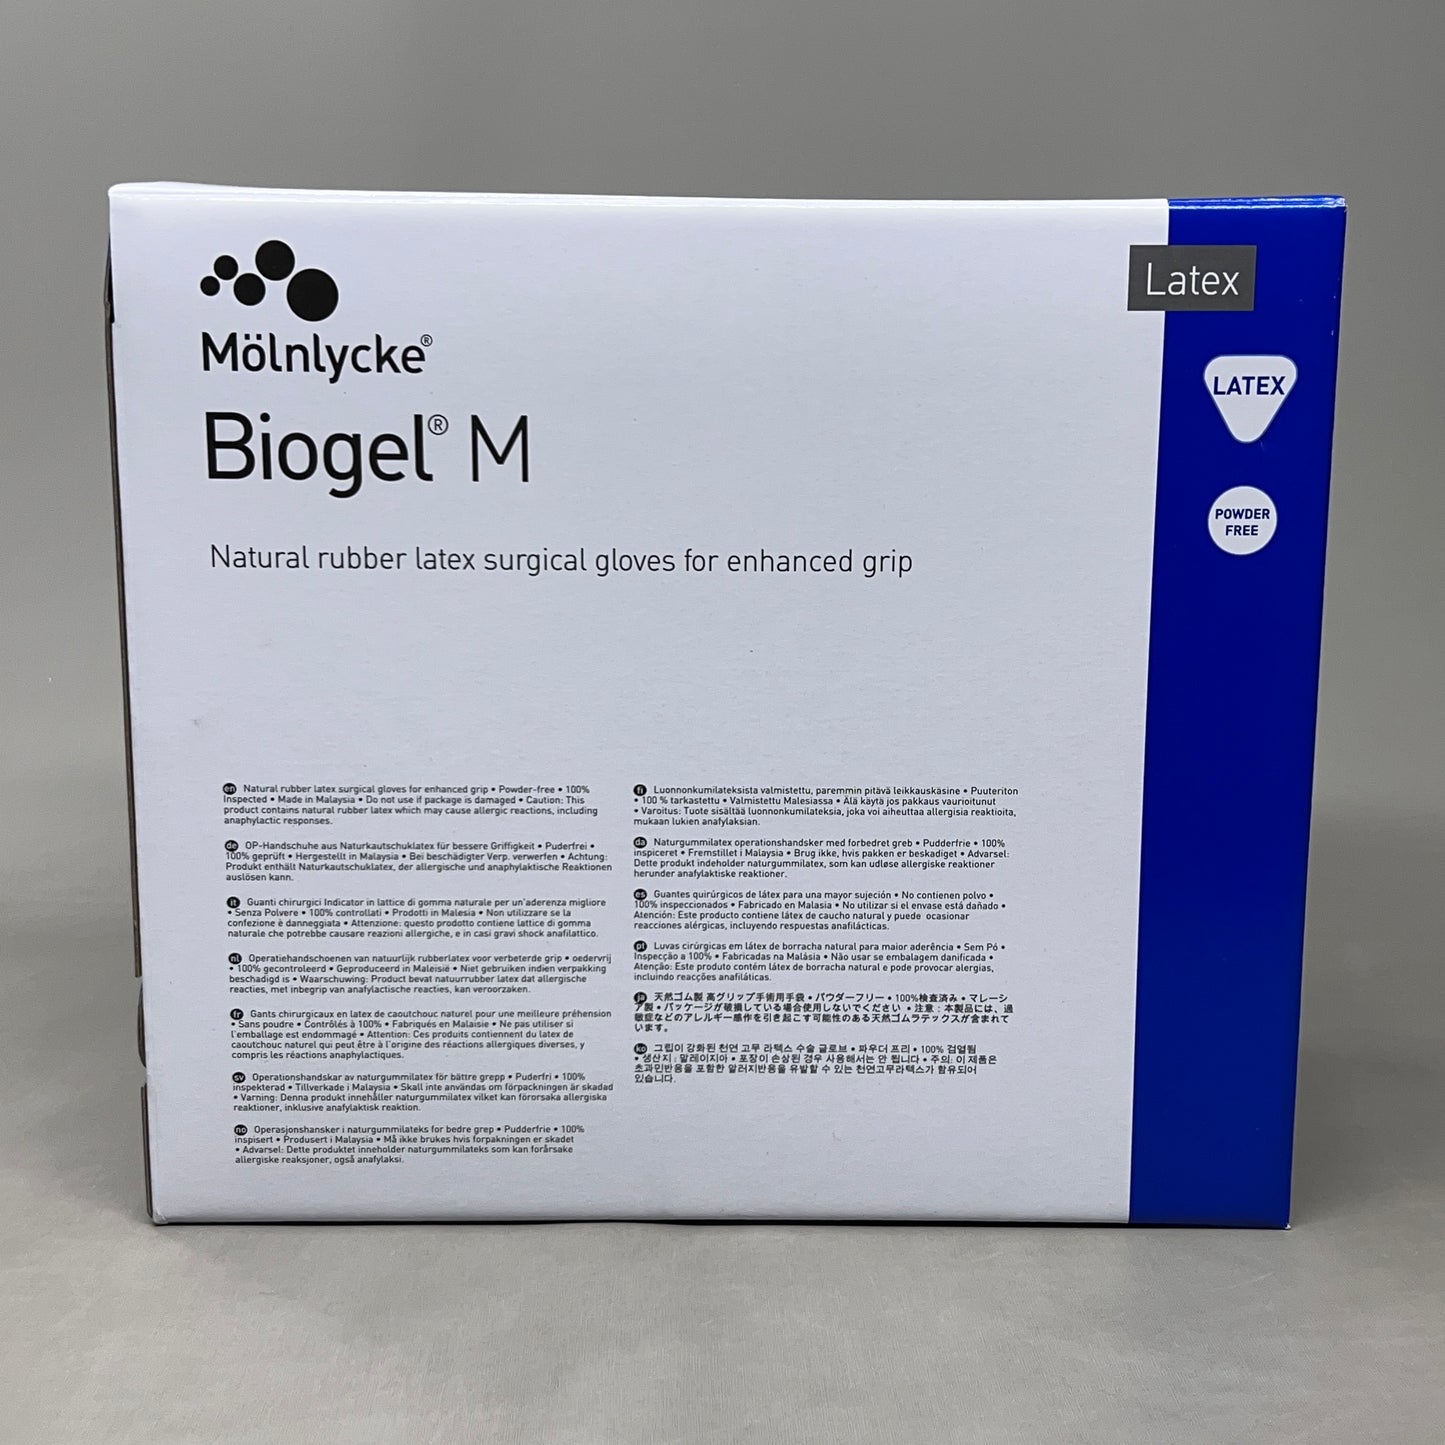 MOLNLYCKE Biogel M Latex Surgical Gloves Enhanced Grip SZ 8 Straw Yellow 50 Pairs 30580 (New)